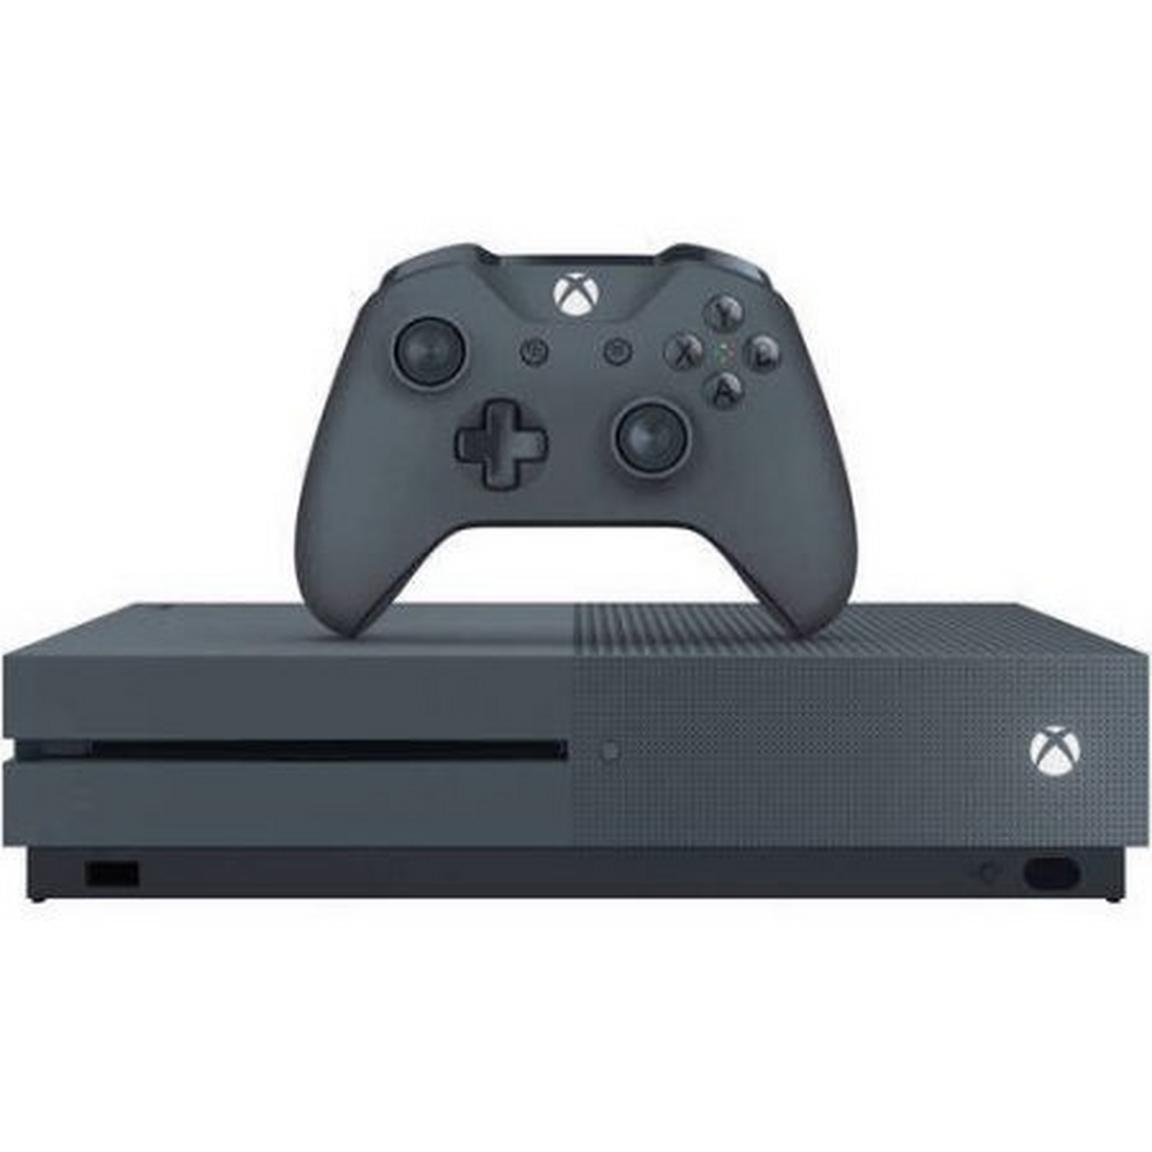 Microsoft Xbox One S Gray 500GB